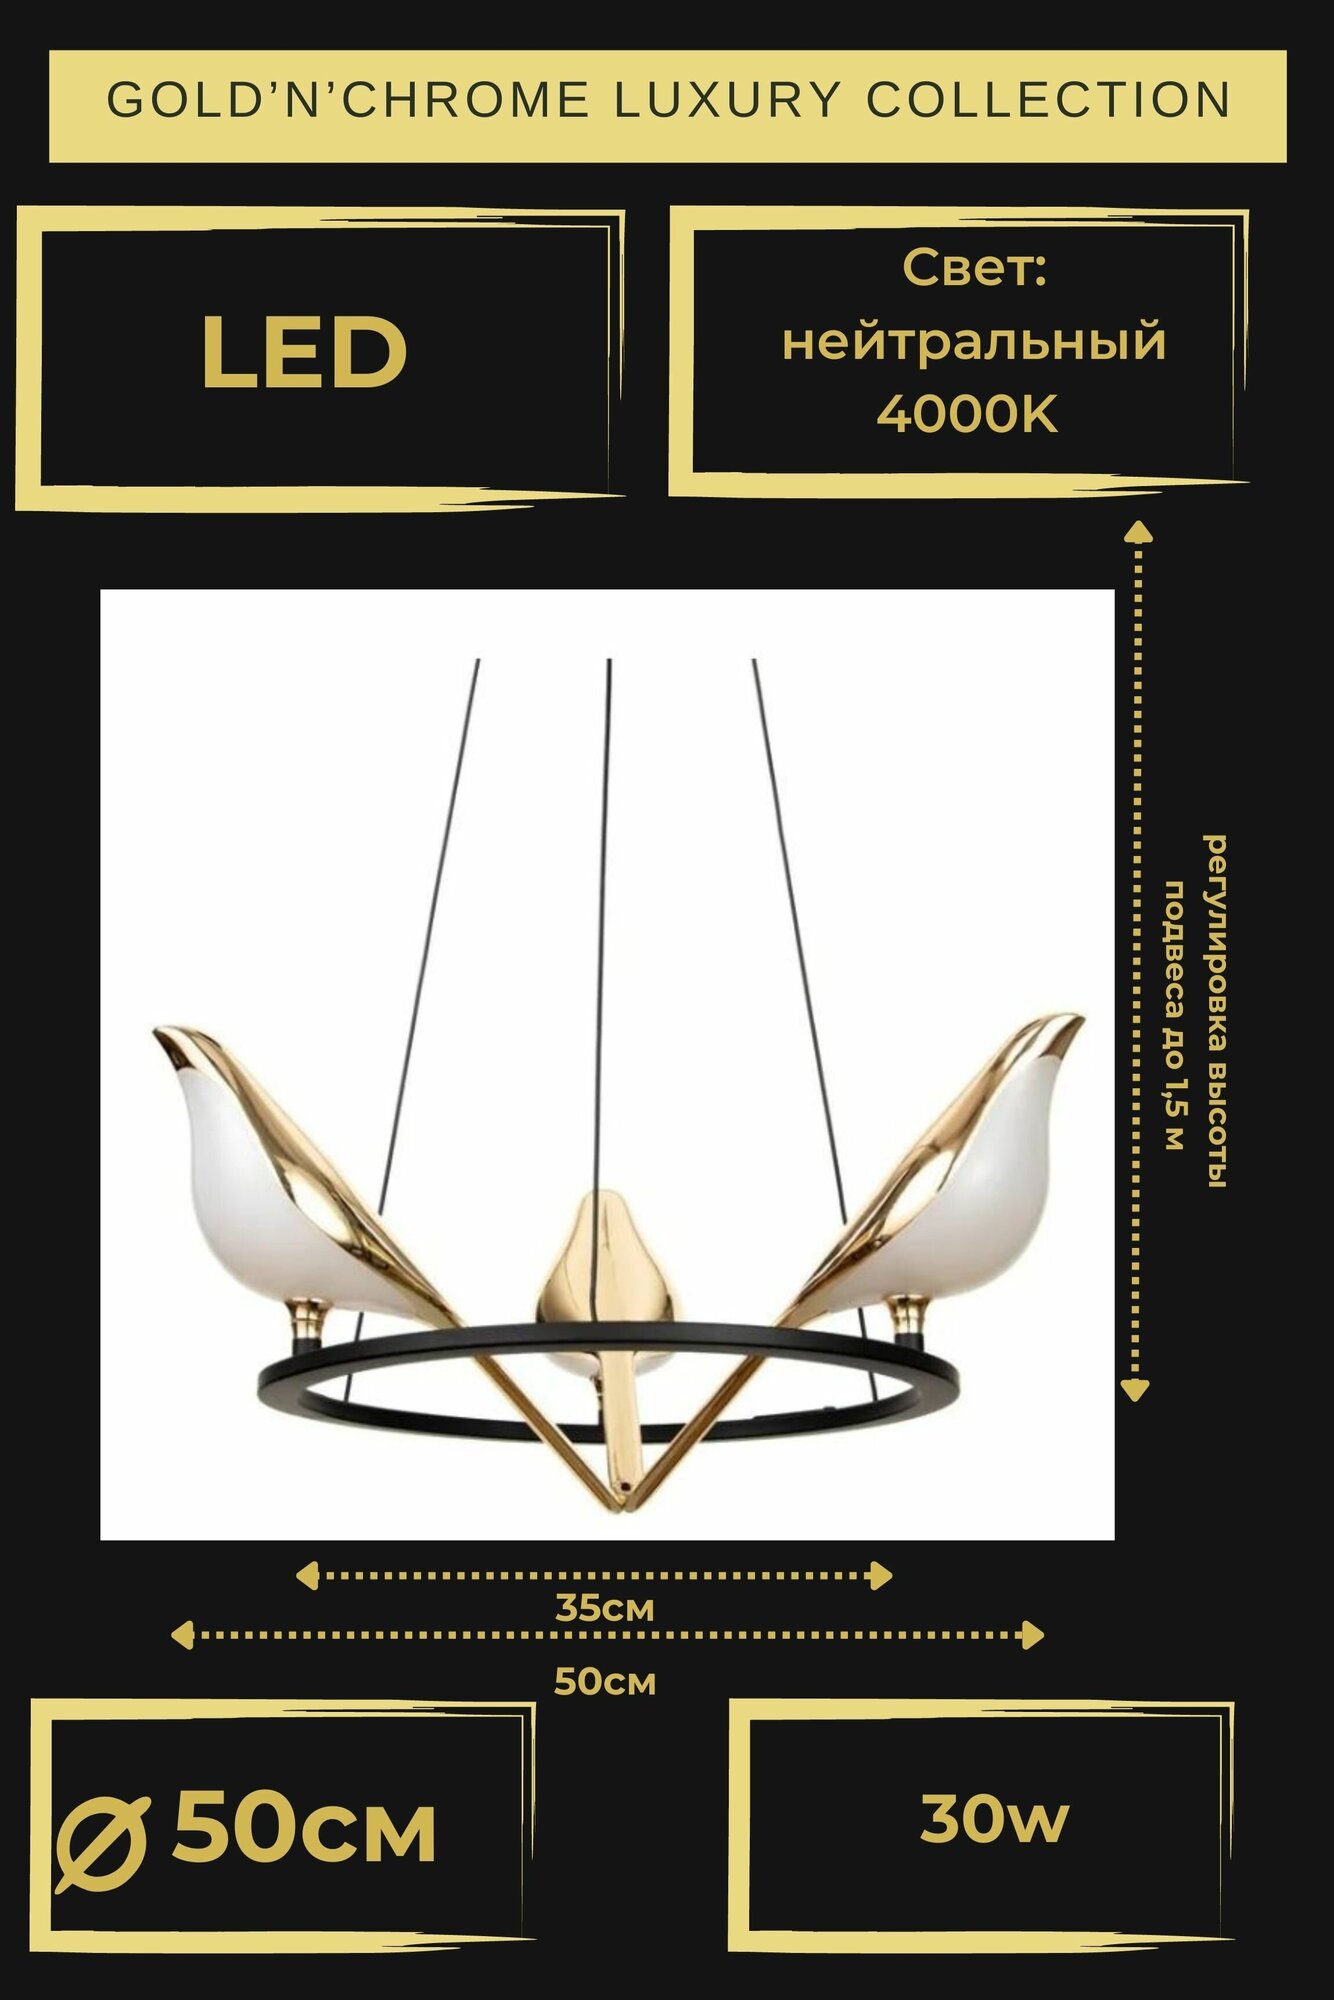 Люстра потолочная 3 Птички, LED, диаметр 50см, 4000K, арт. 9008-3D Gold'n'Chrome, люстра потолочная подвесная